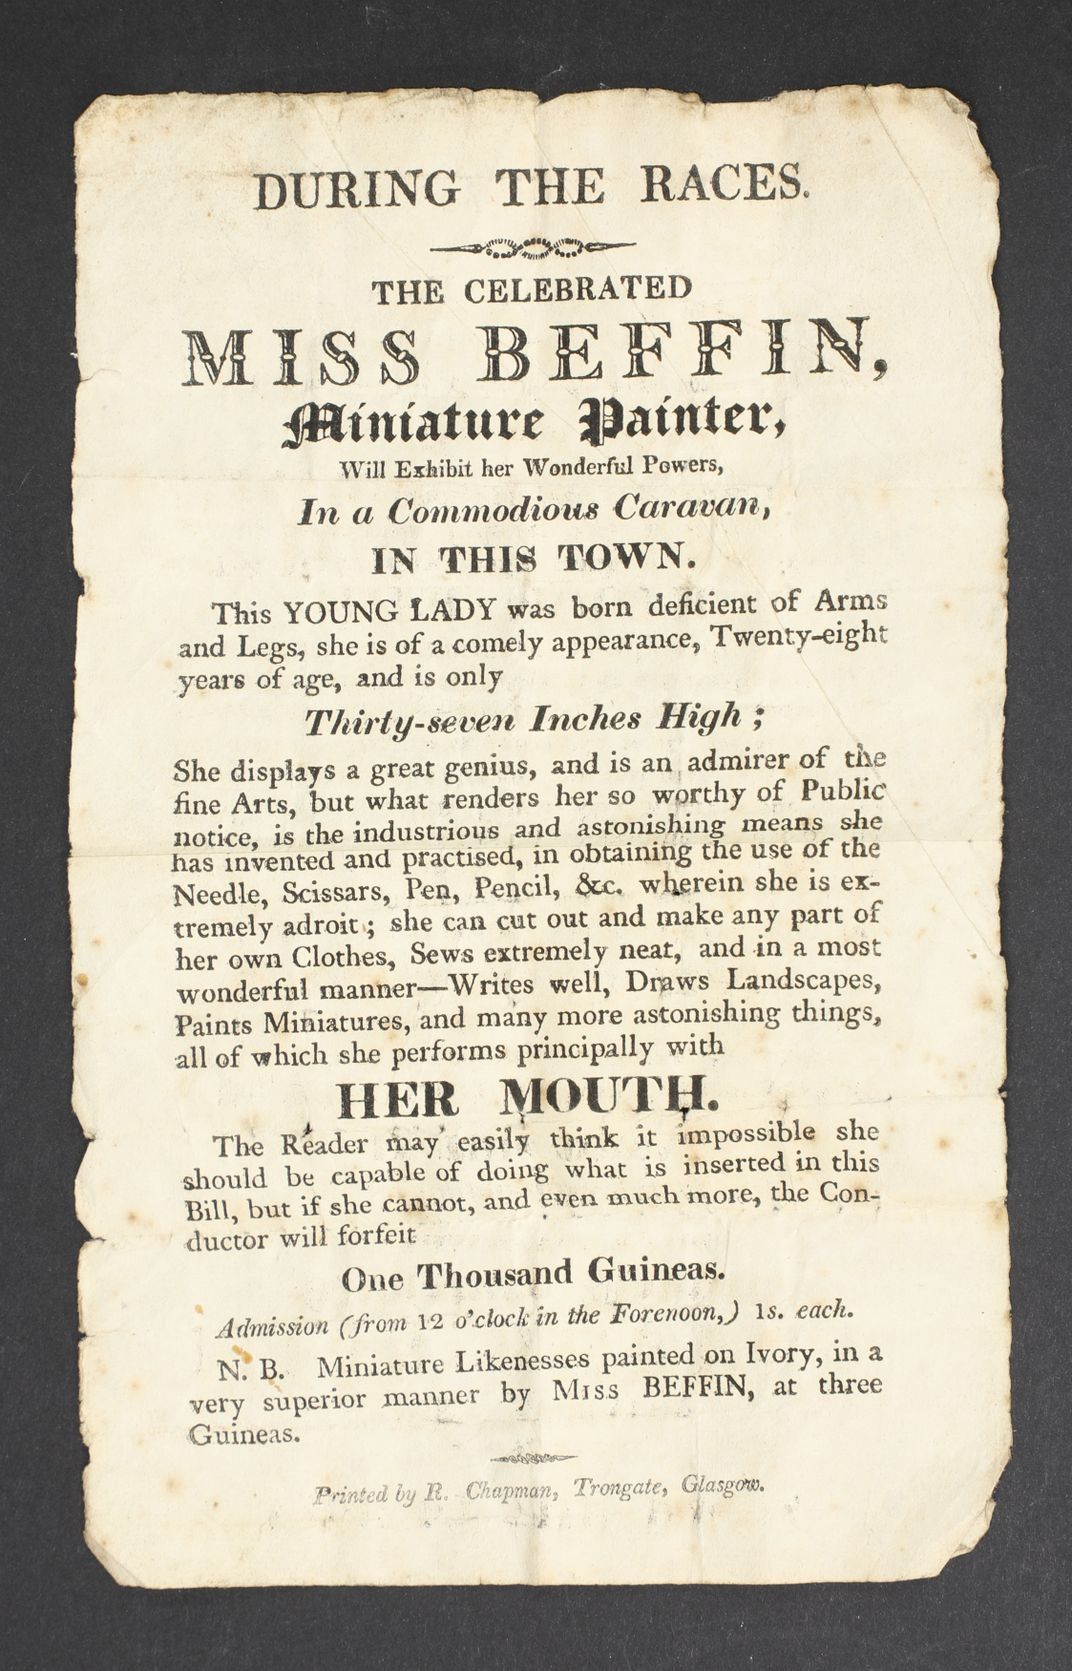 A leaflet promoting Miss Biffin, miniature painter